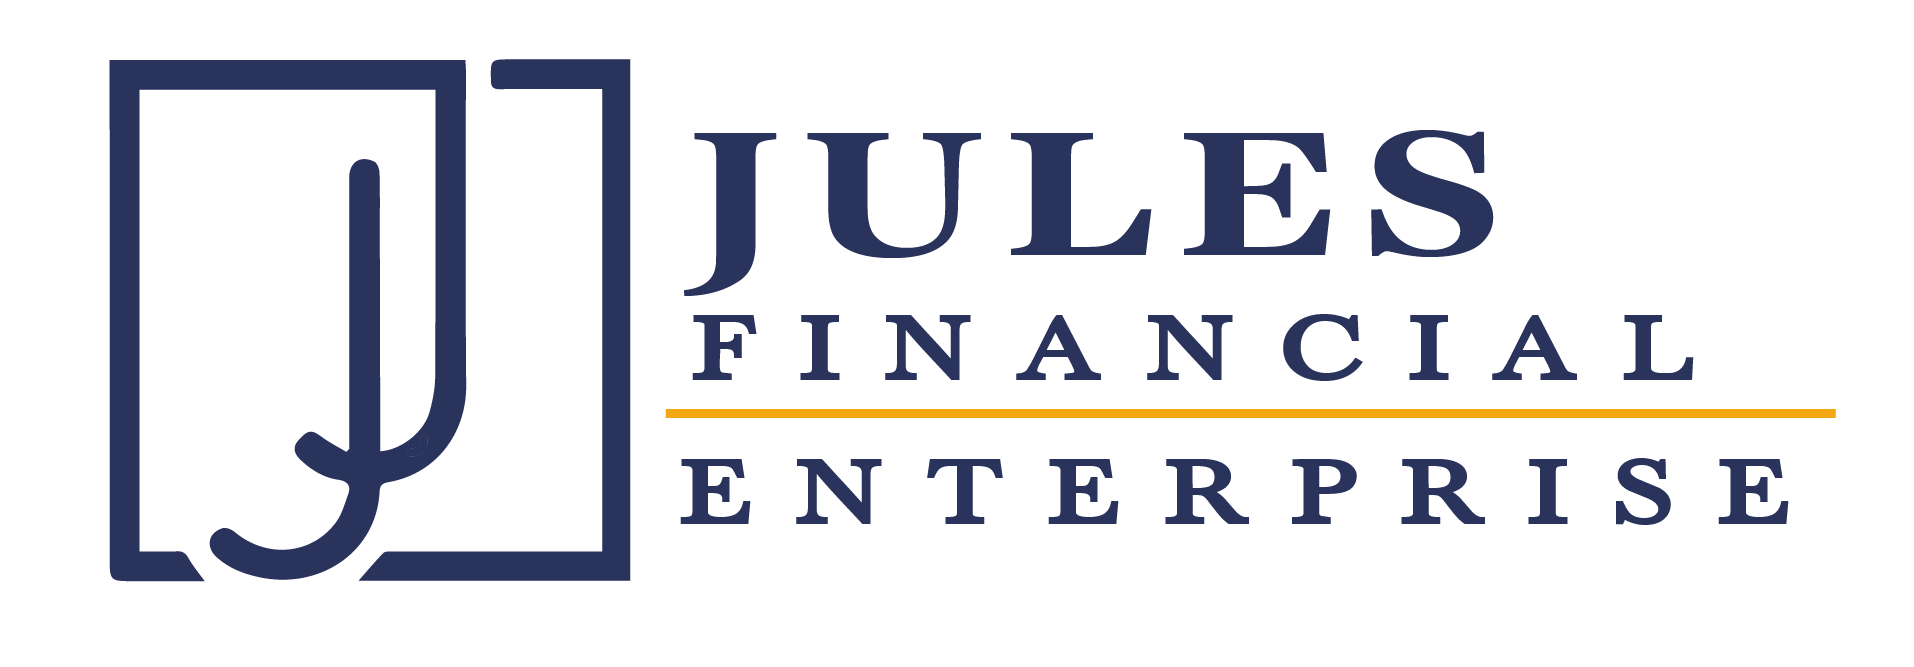 J. Jules Enterprise